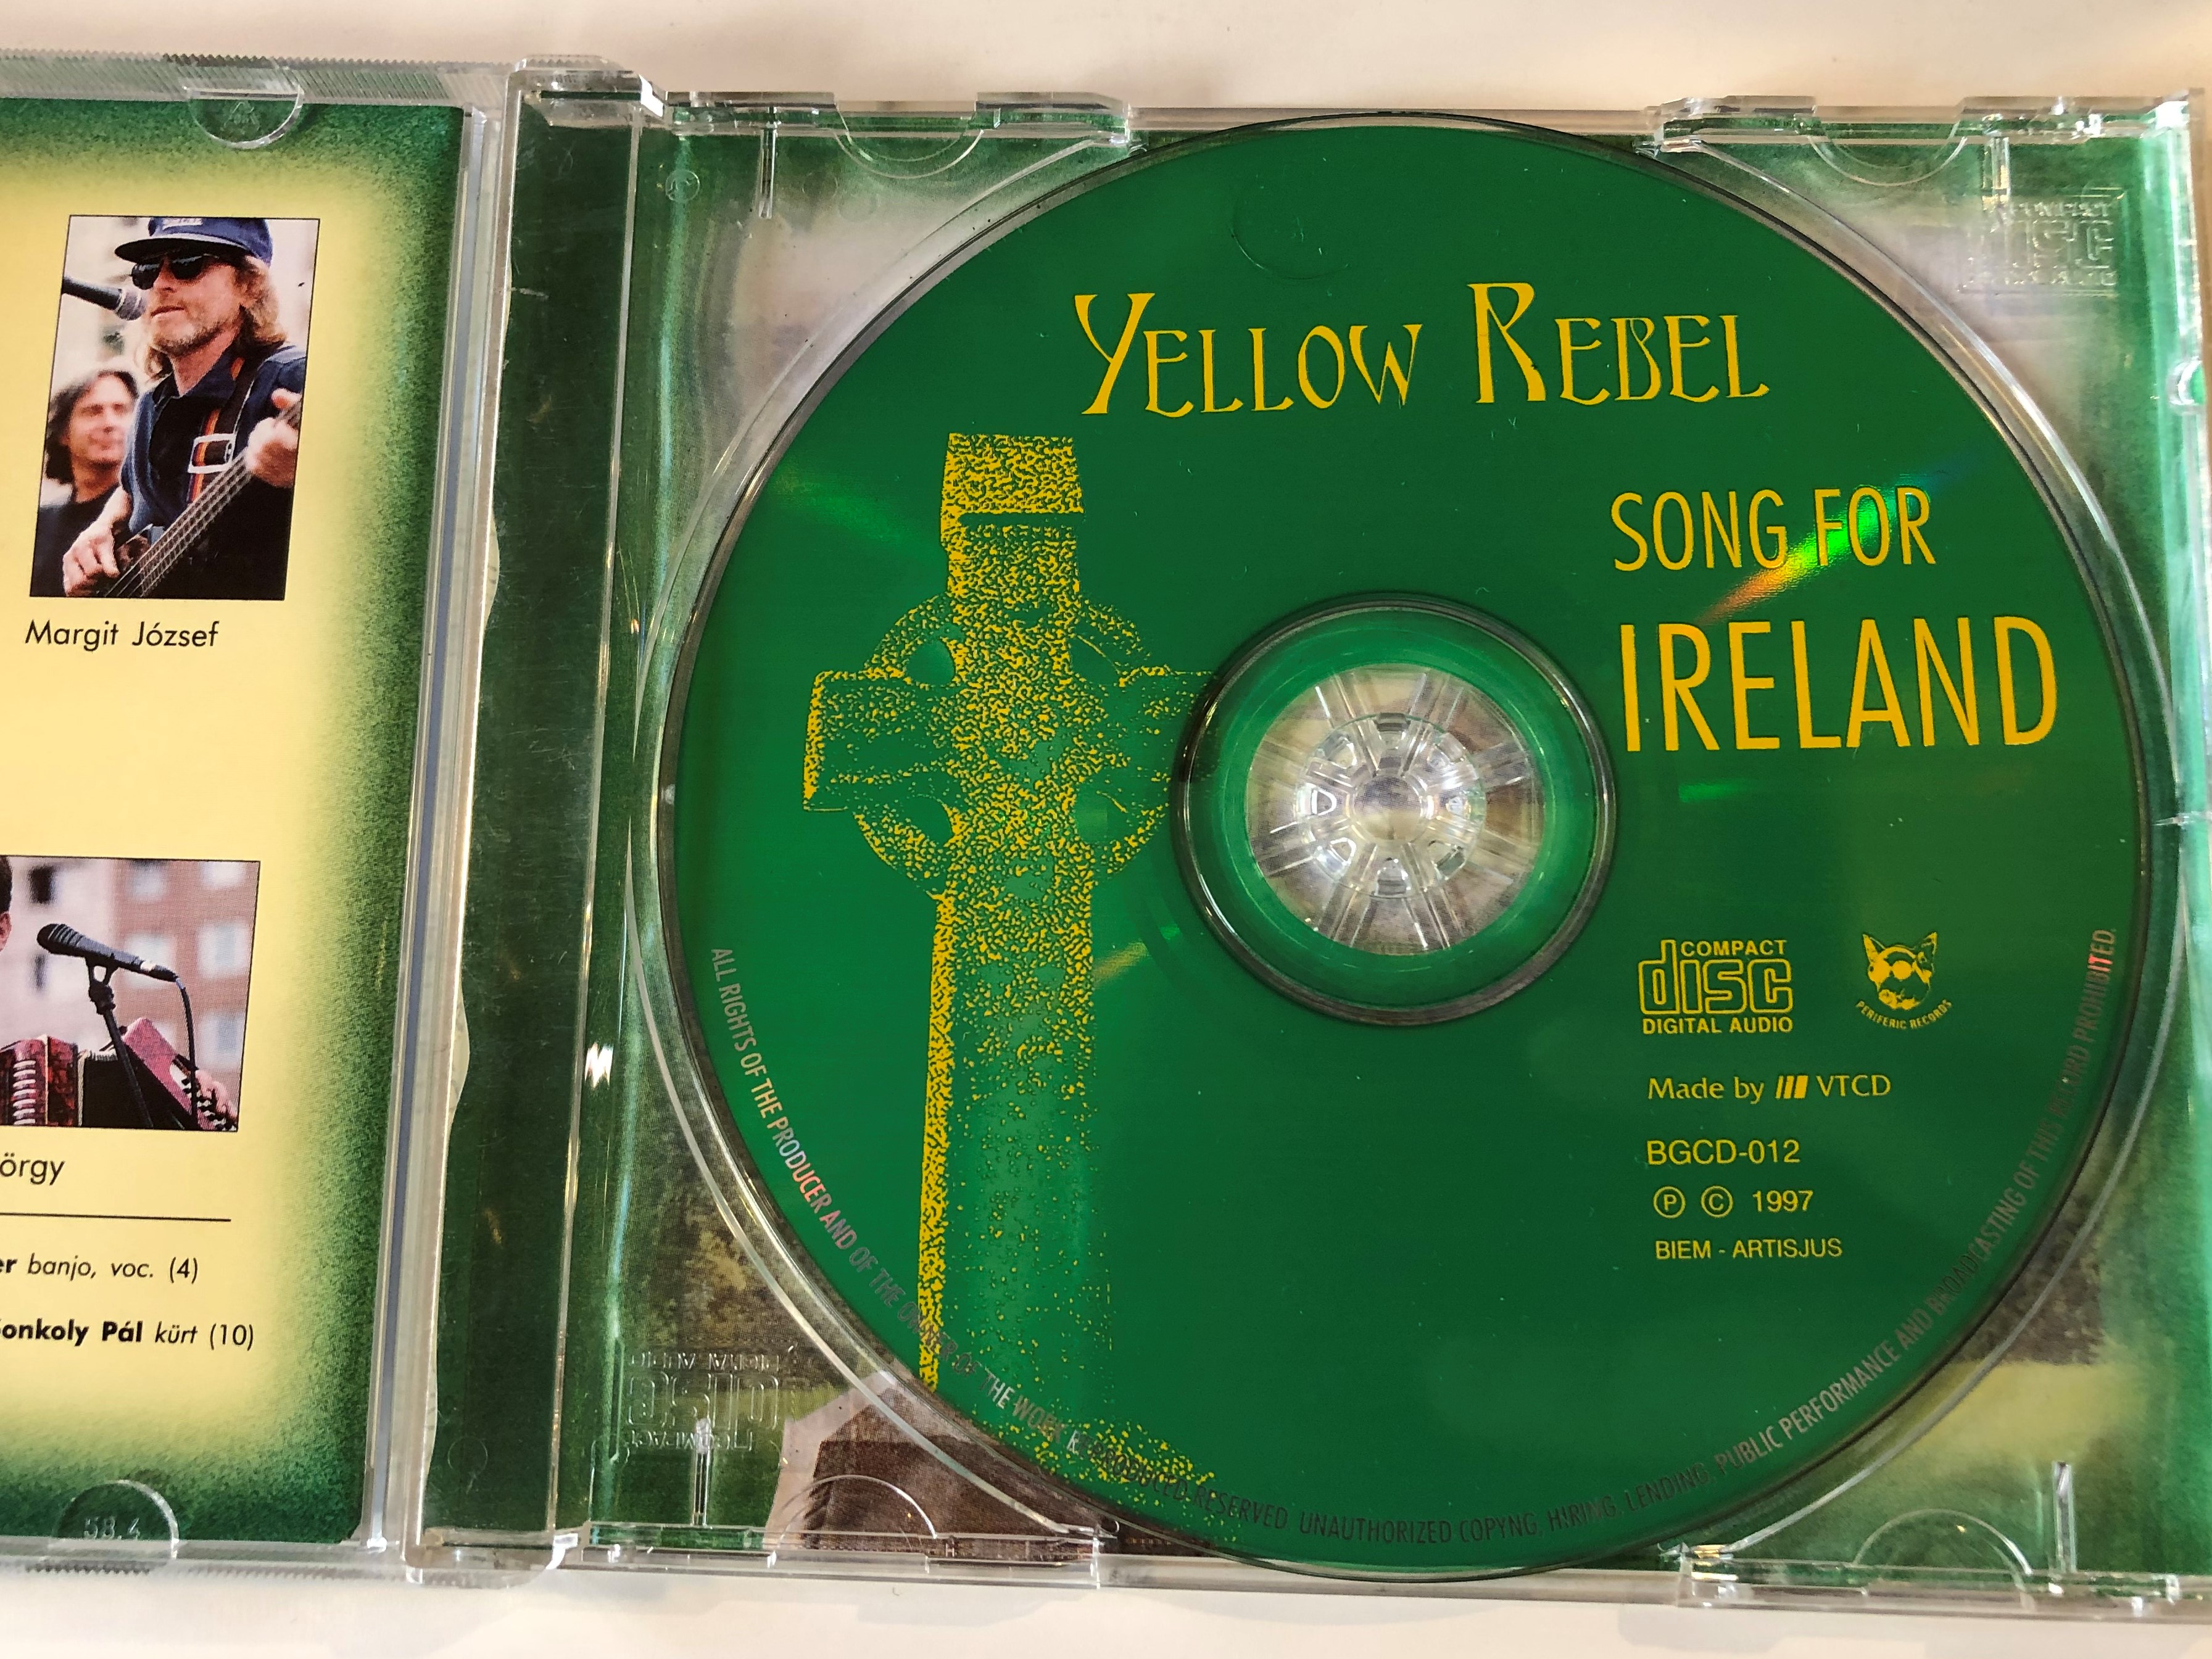 yellow-rebel-song-for-ireland-periferic-records-audio-cd-1997-bgcd-012-3-.jpg